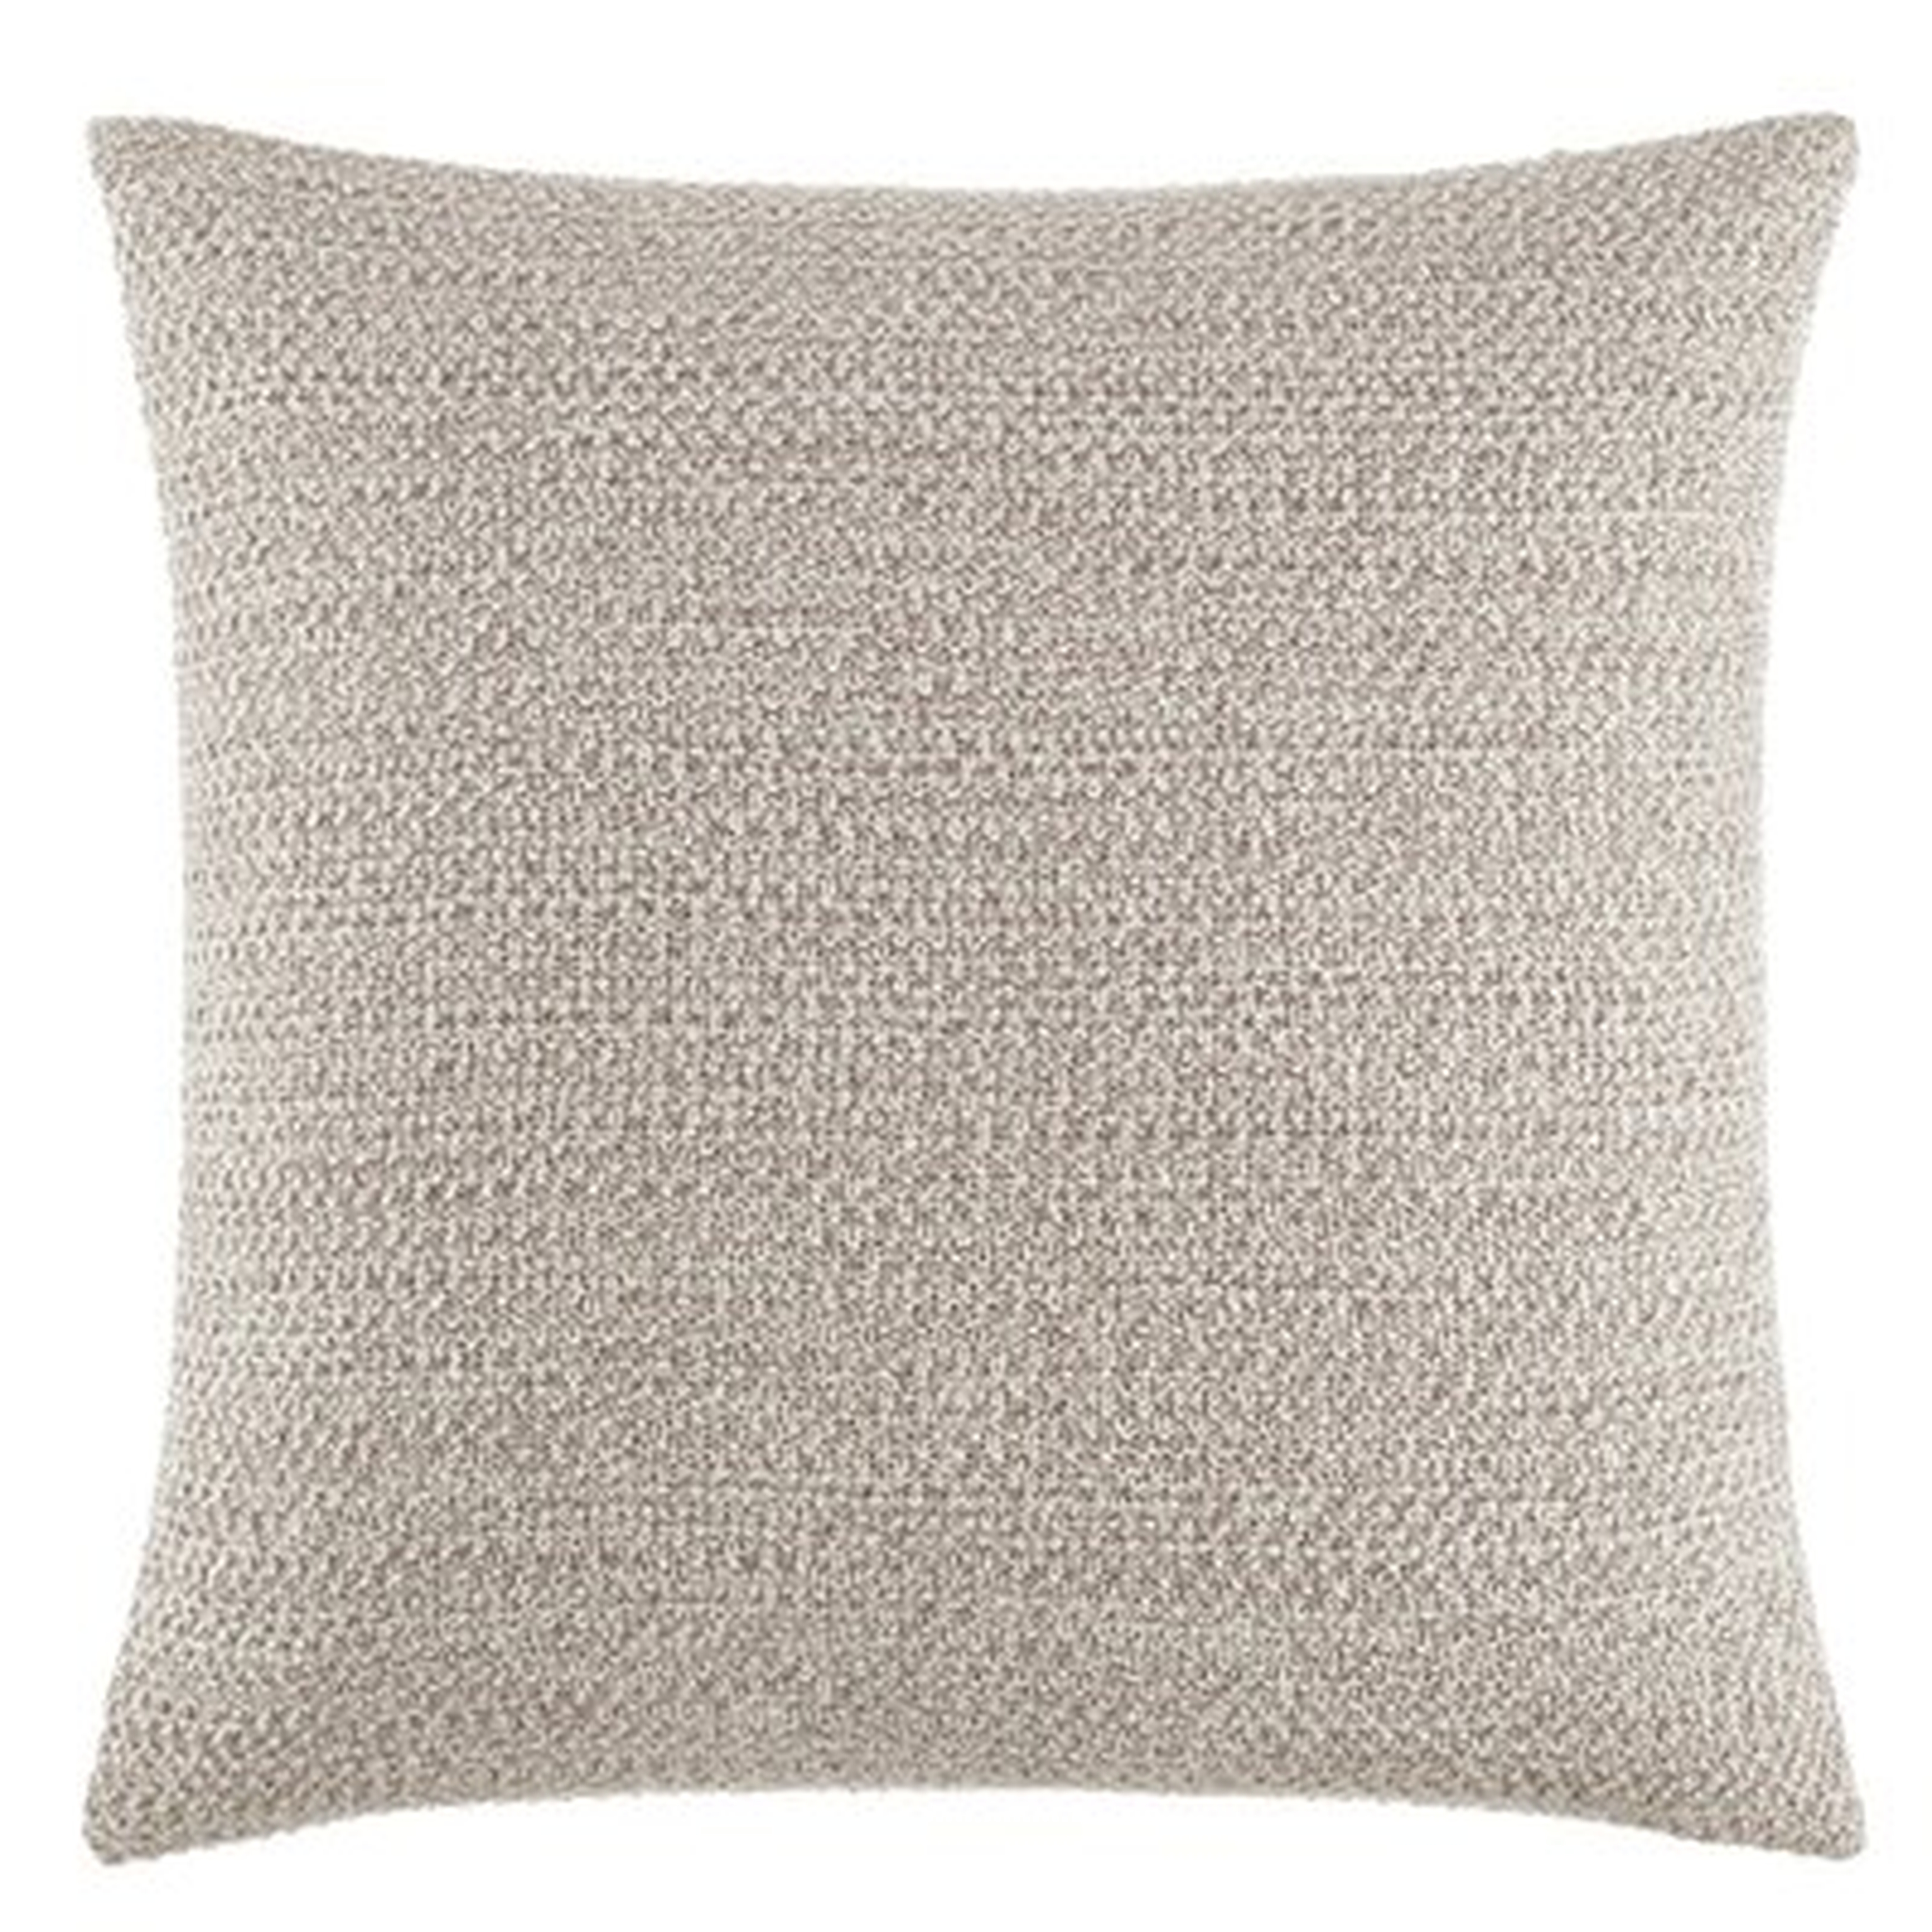 Kenneth Cole New York Marled Knit Beige Throw Pillow - Wayfair